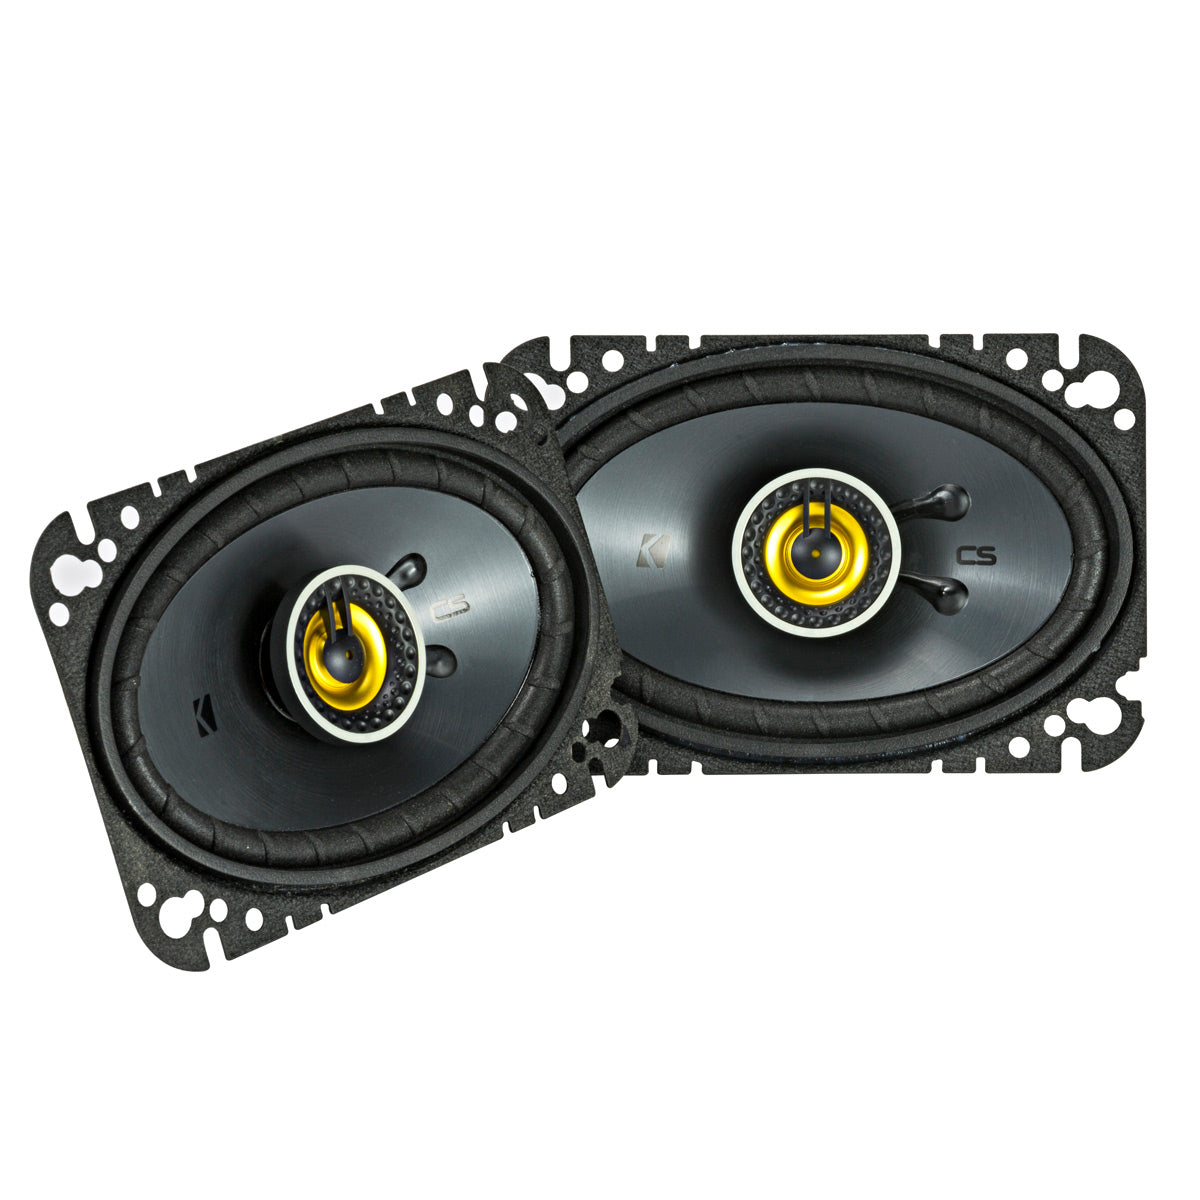 Kicker 46CSC464 CS-Series 4x6" 2-Way Coaxial Speakers